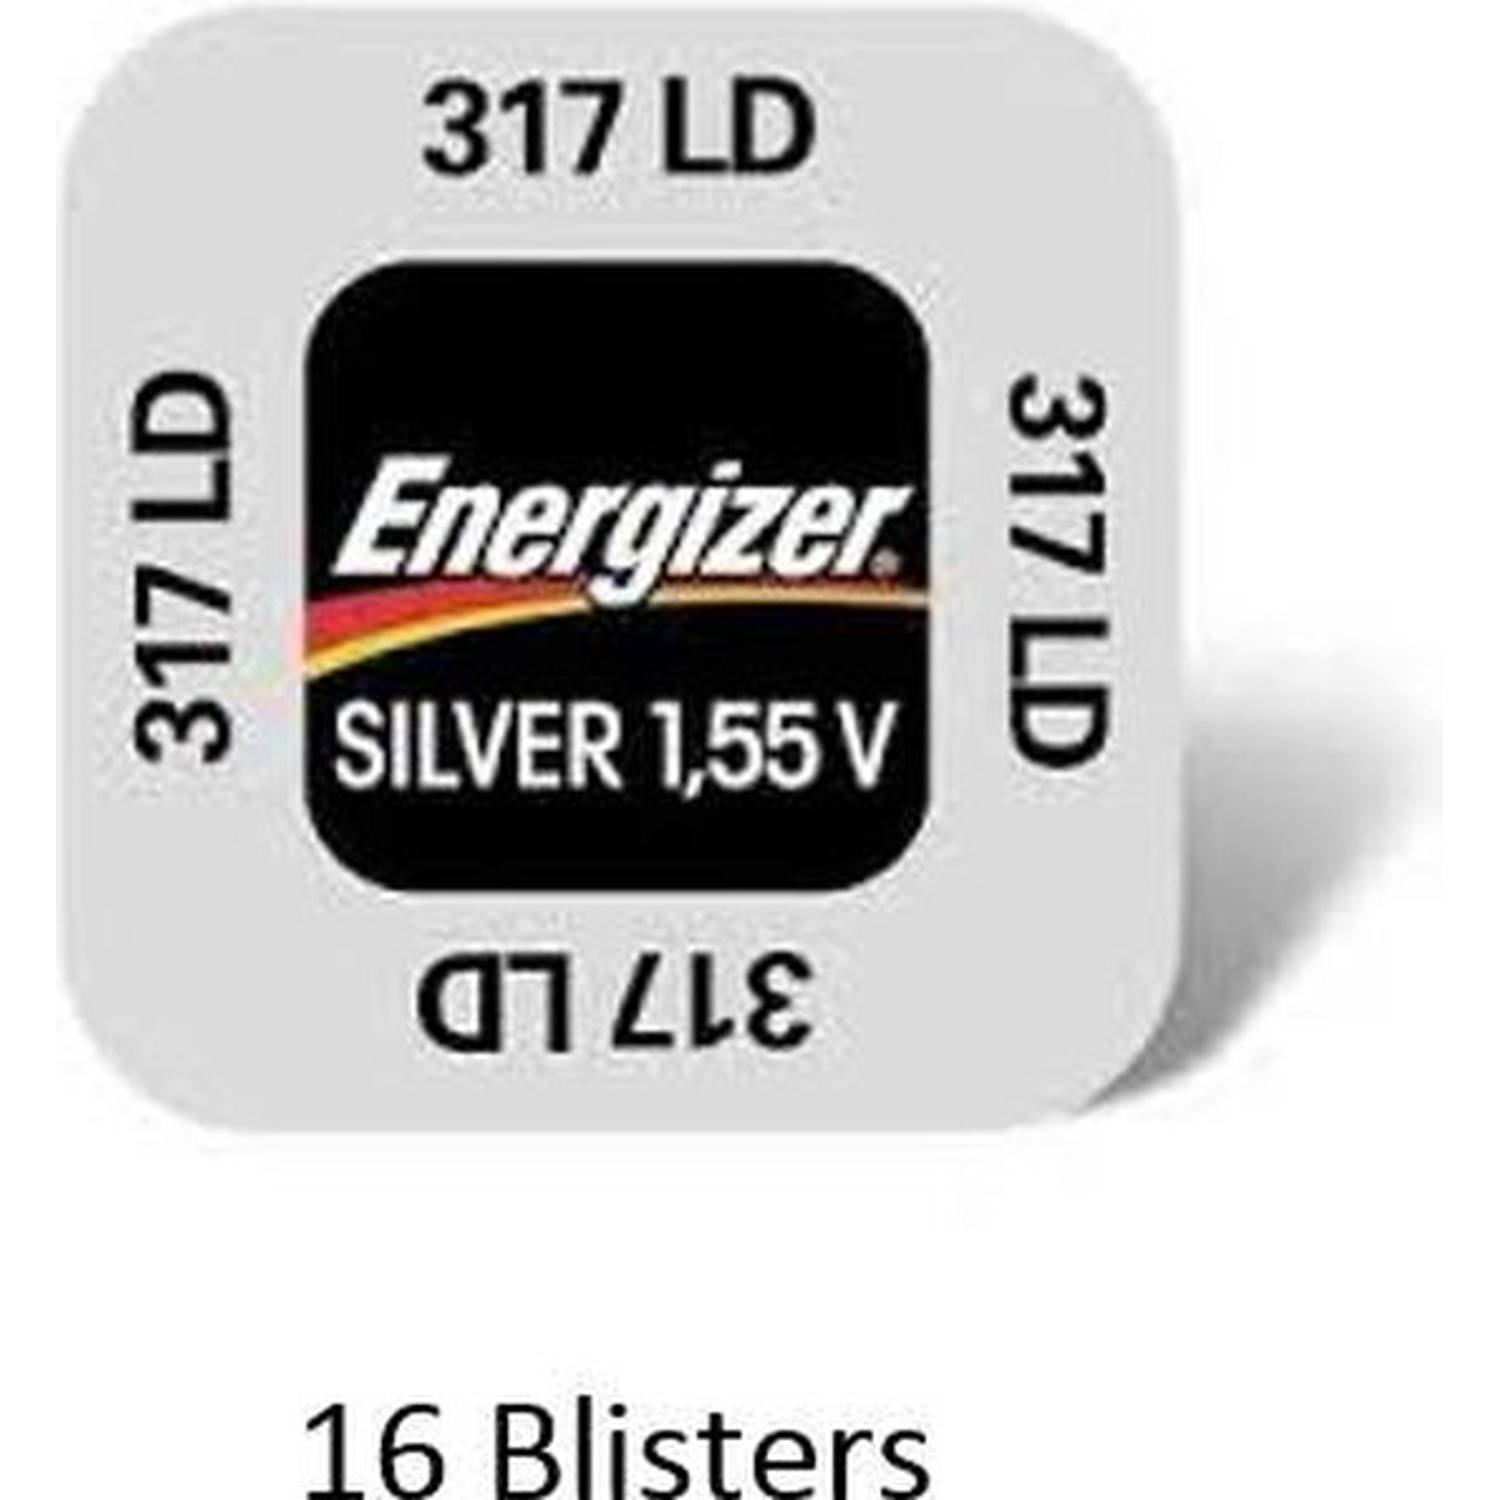 16 Stuks (16 Blisters A 1 Stuk) Energizer Zilver Oxide Knoopcel 317 Ld 1.55v